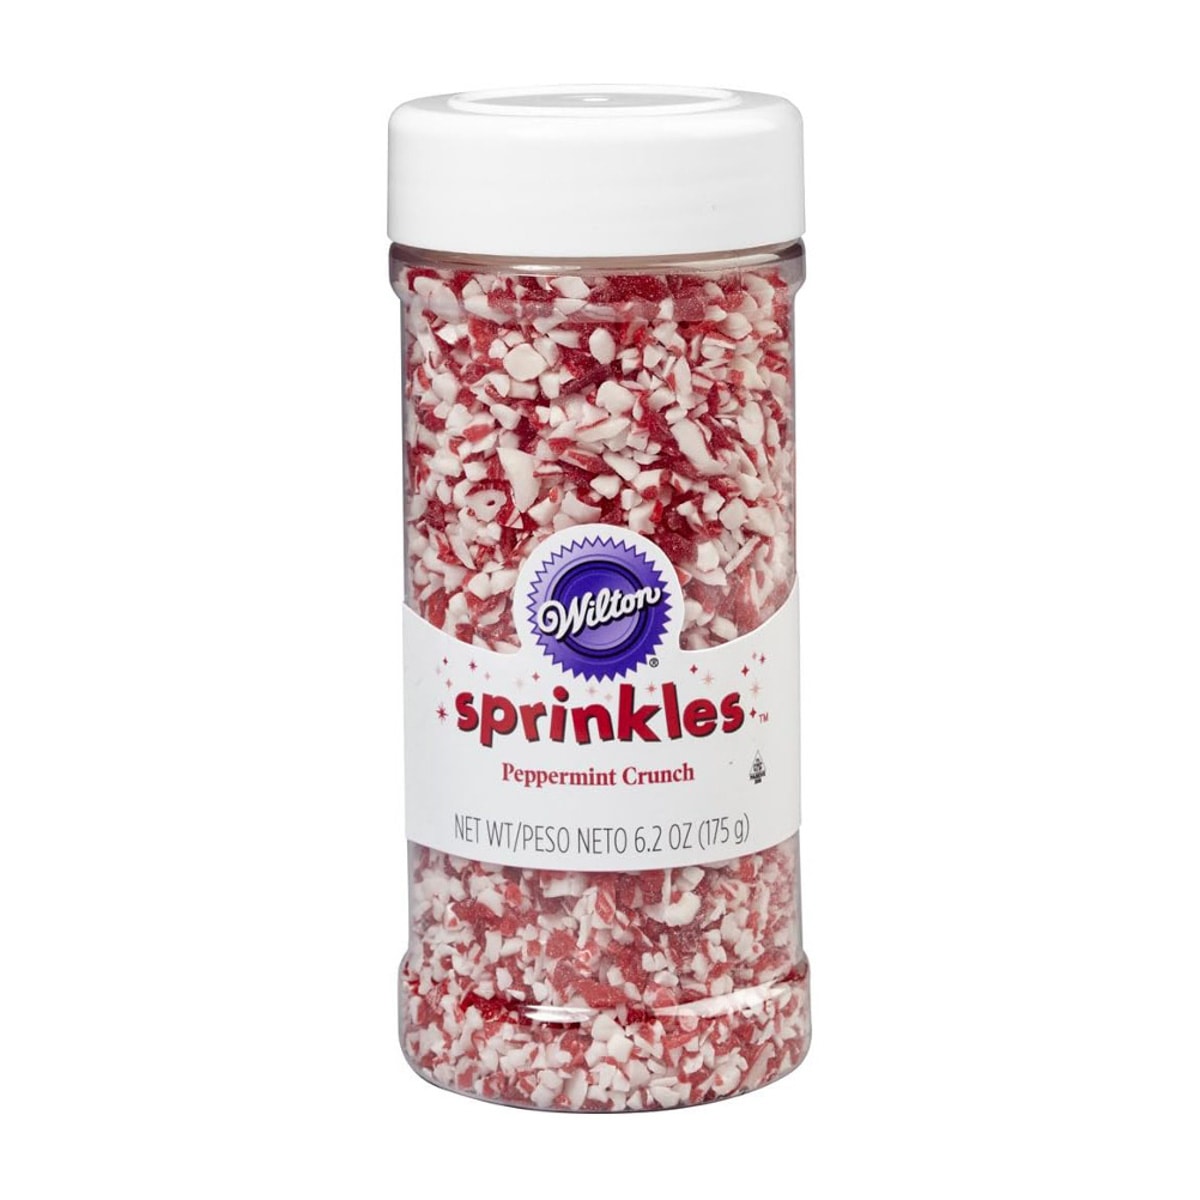 Peppermint crunch sprinkles.